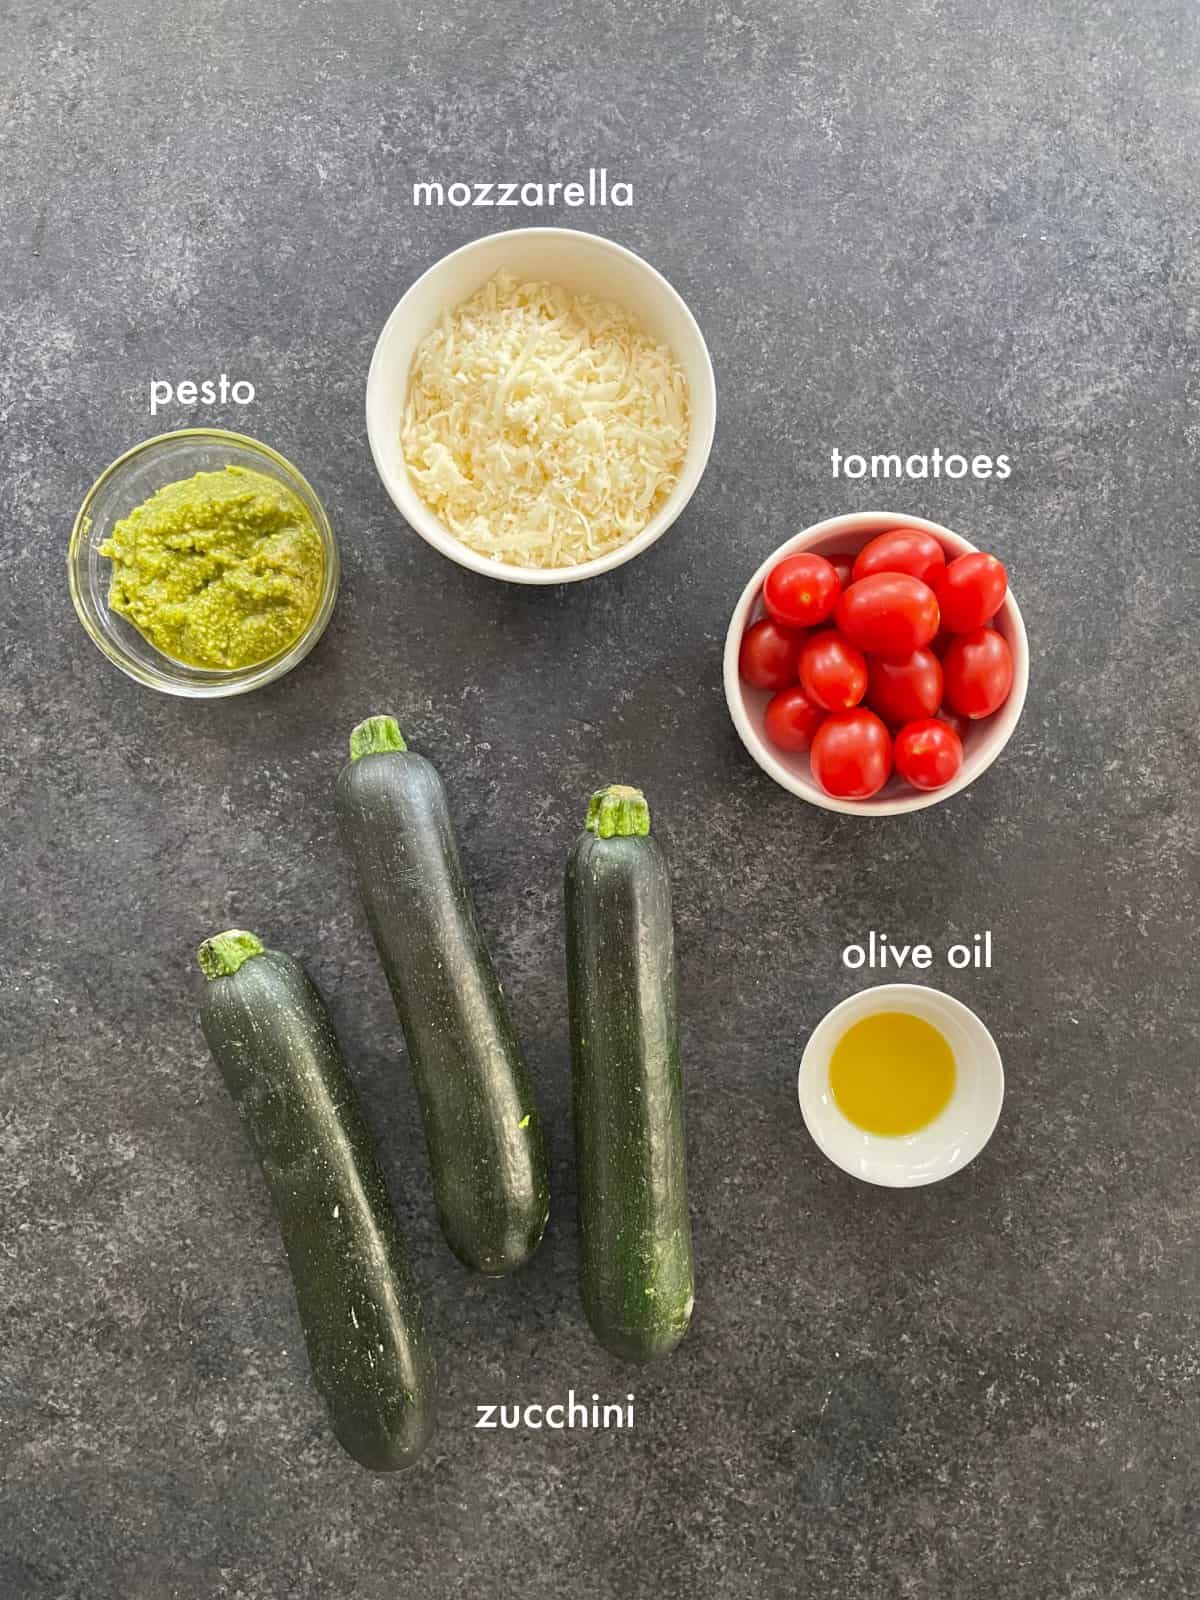 To make this recipe you need zucchini, mozzarella, pesto, tomatoes and olive oil. 